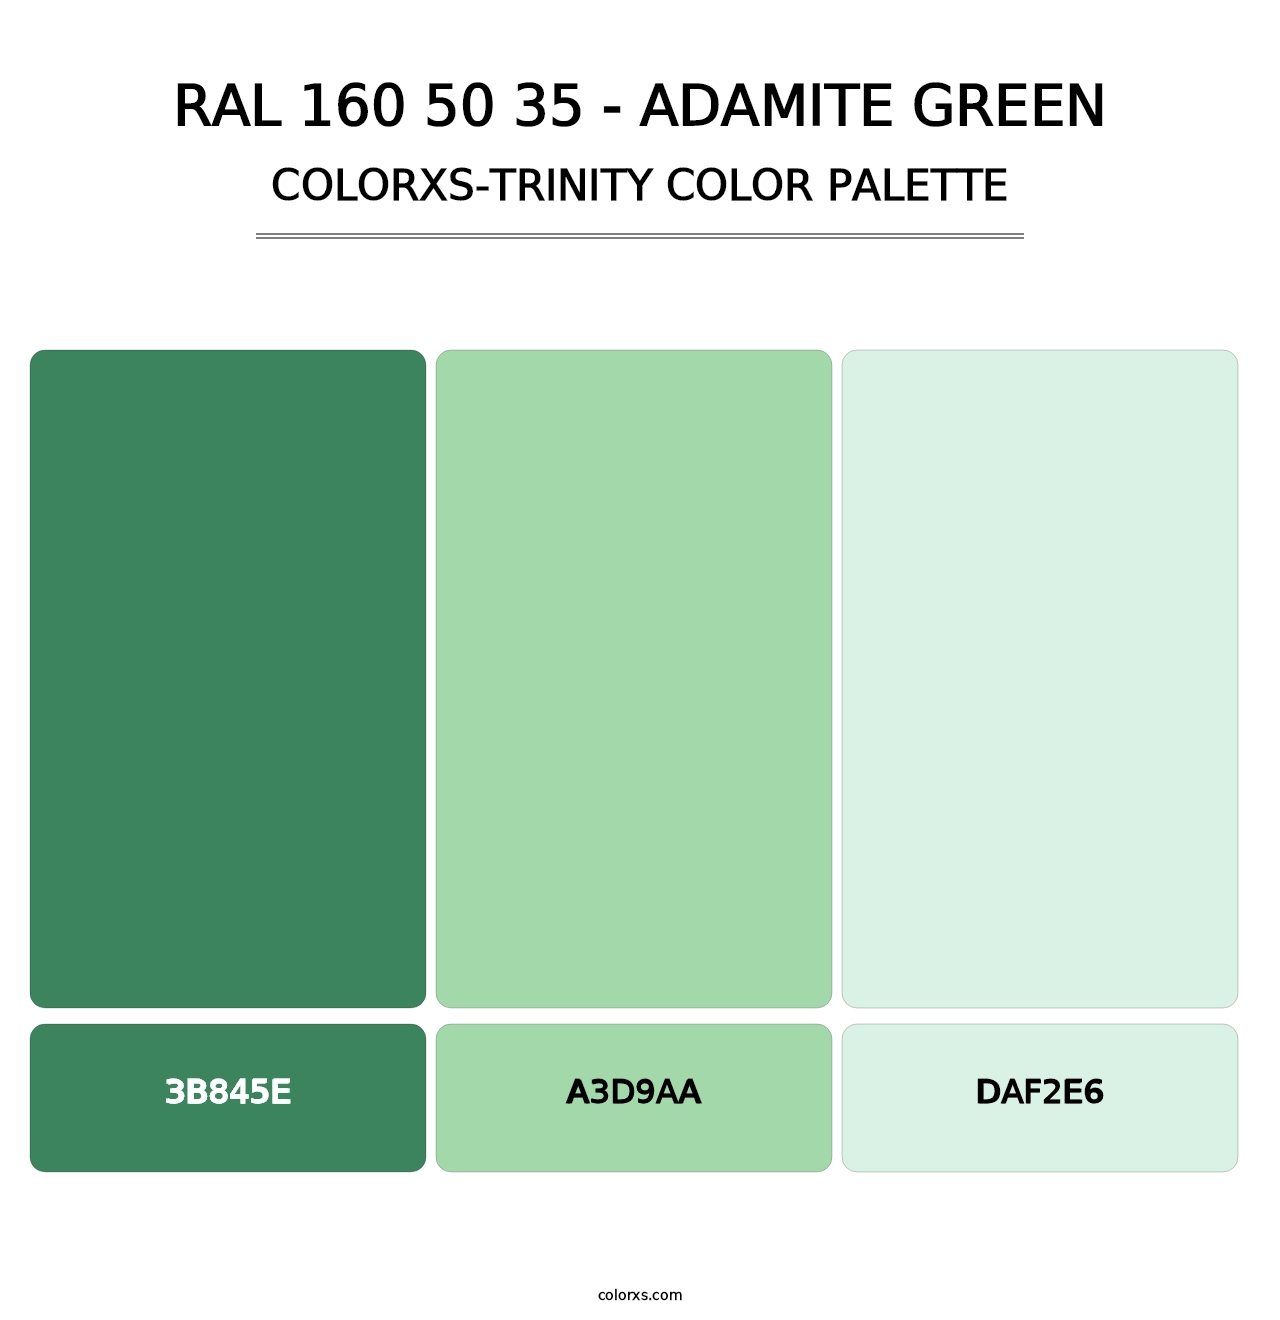 RAL 160 50 35 - Adamite Green - Colorxs Trinity Palette